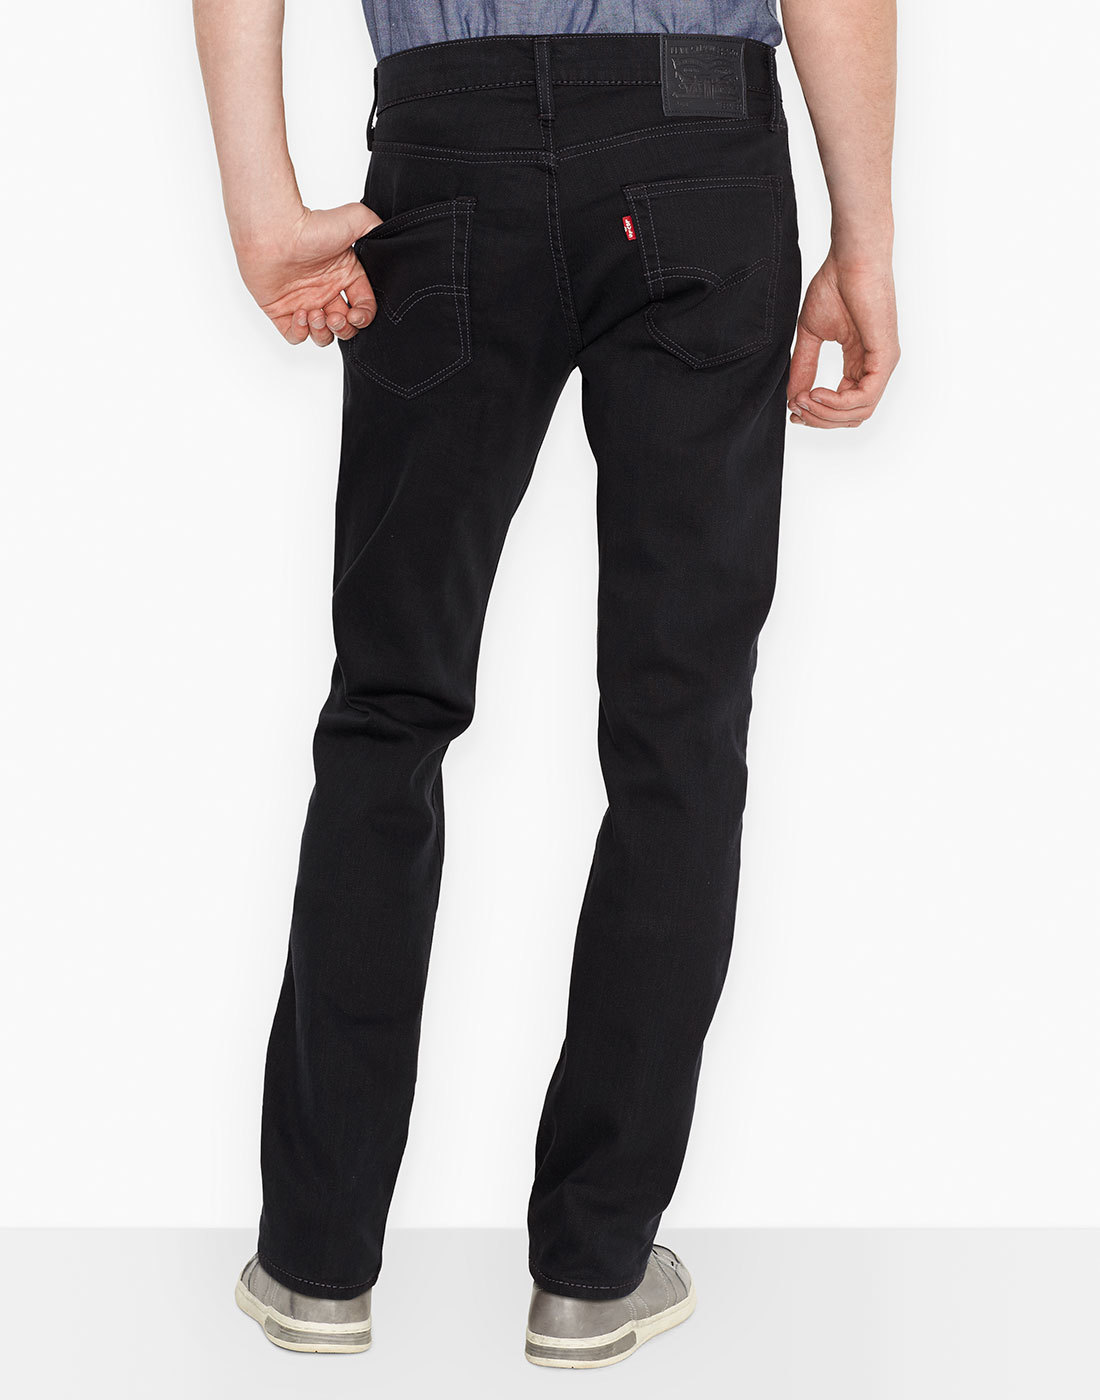 LEVI'S® 511 Retro Slim Fit Mod Denim Jeans in Moonshine Black